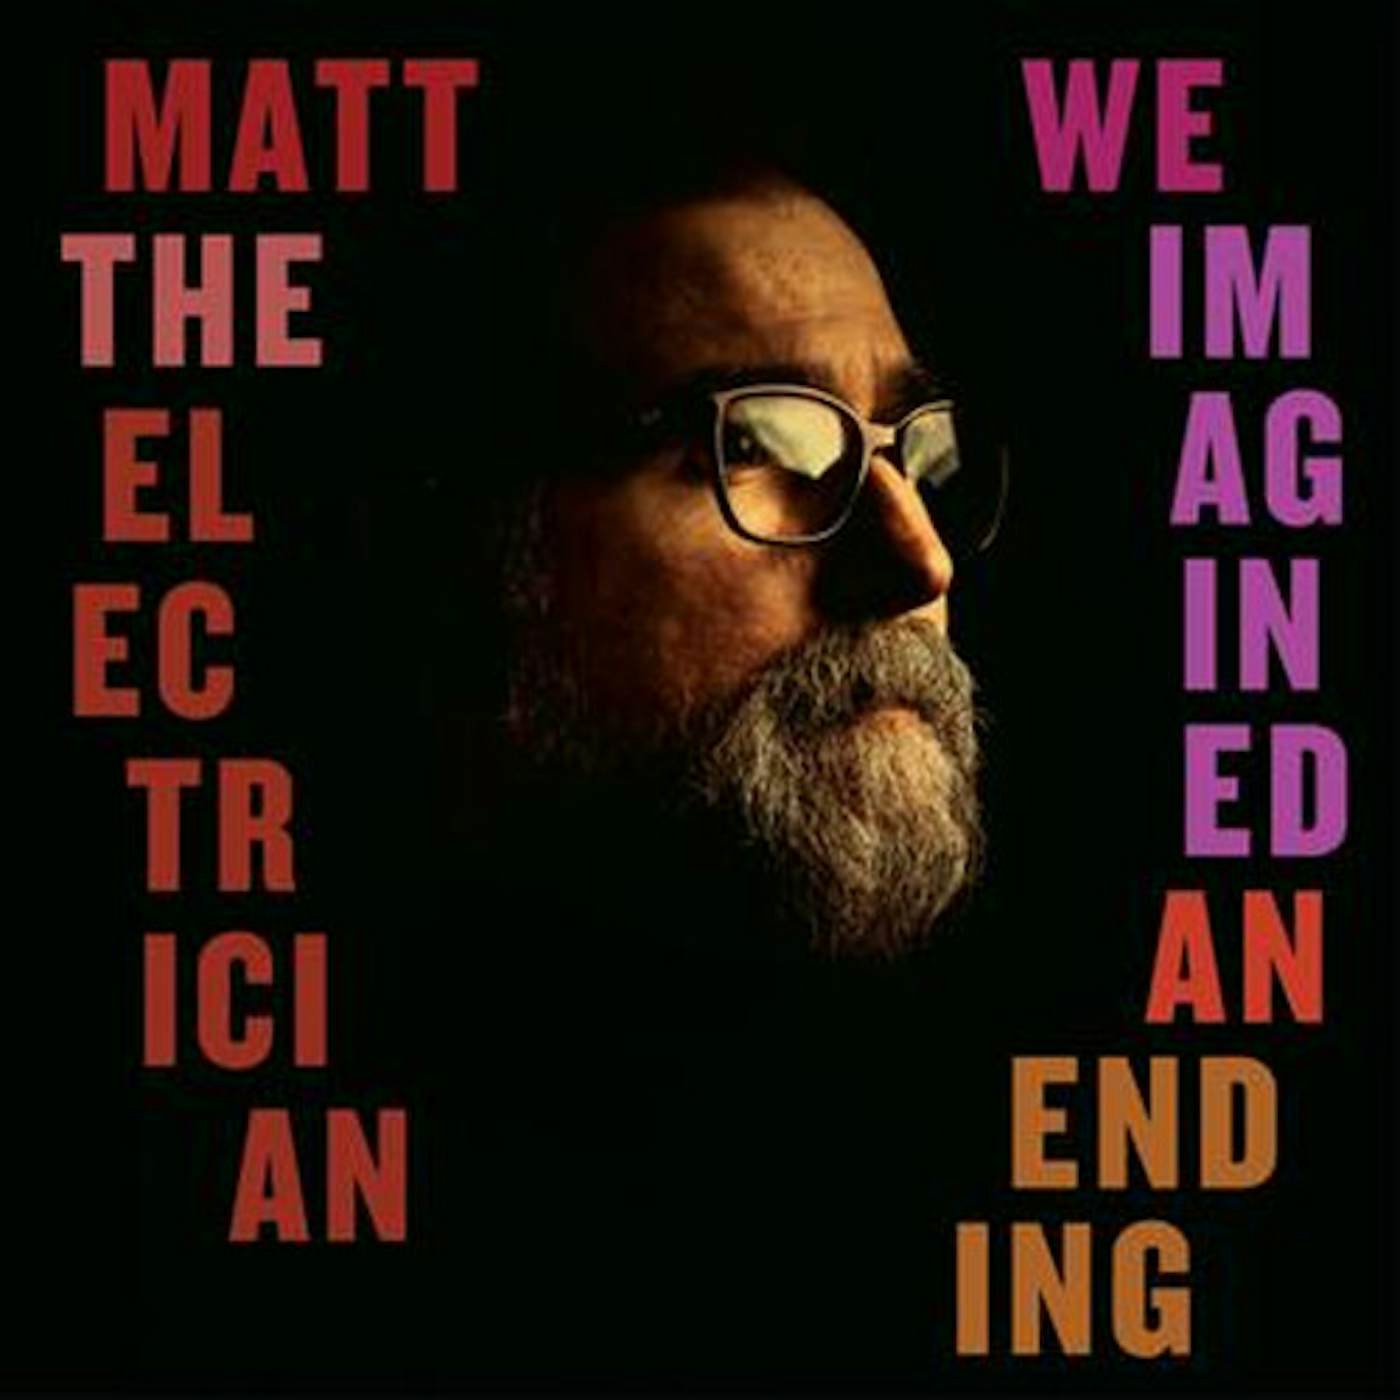 Matt the Electrician We Imagined an Ending Vinyl Record